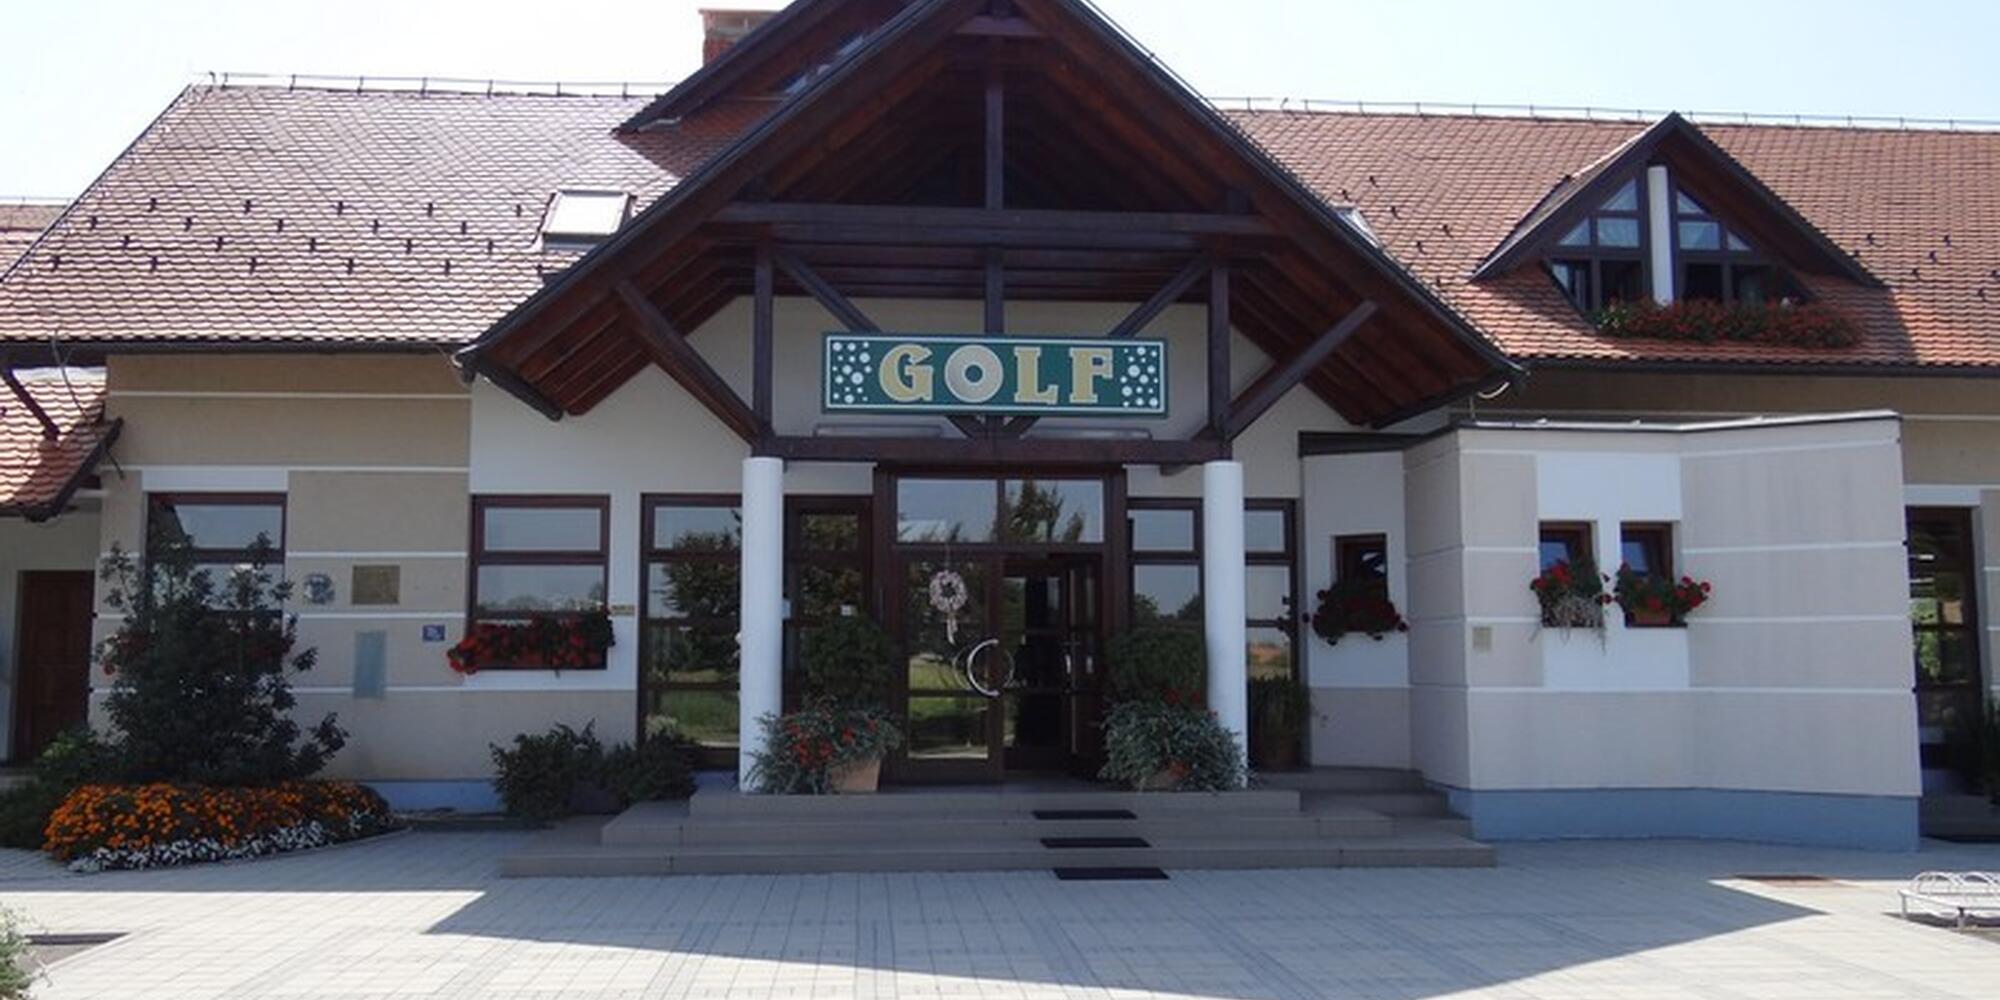 Hotel Golf